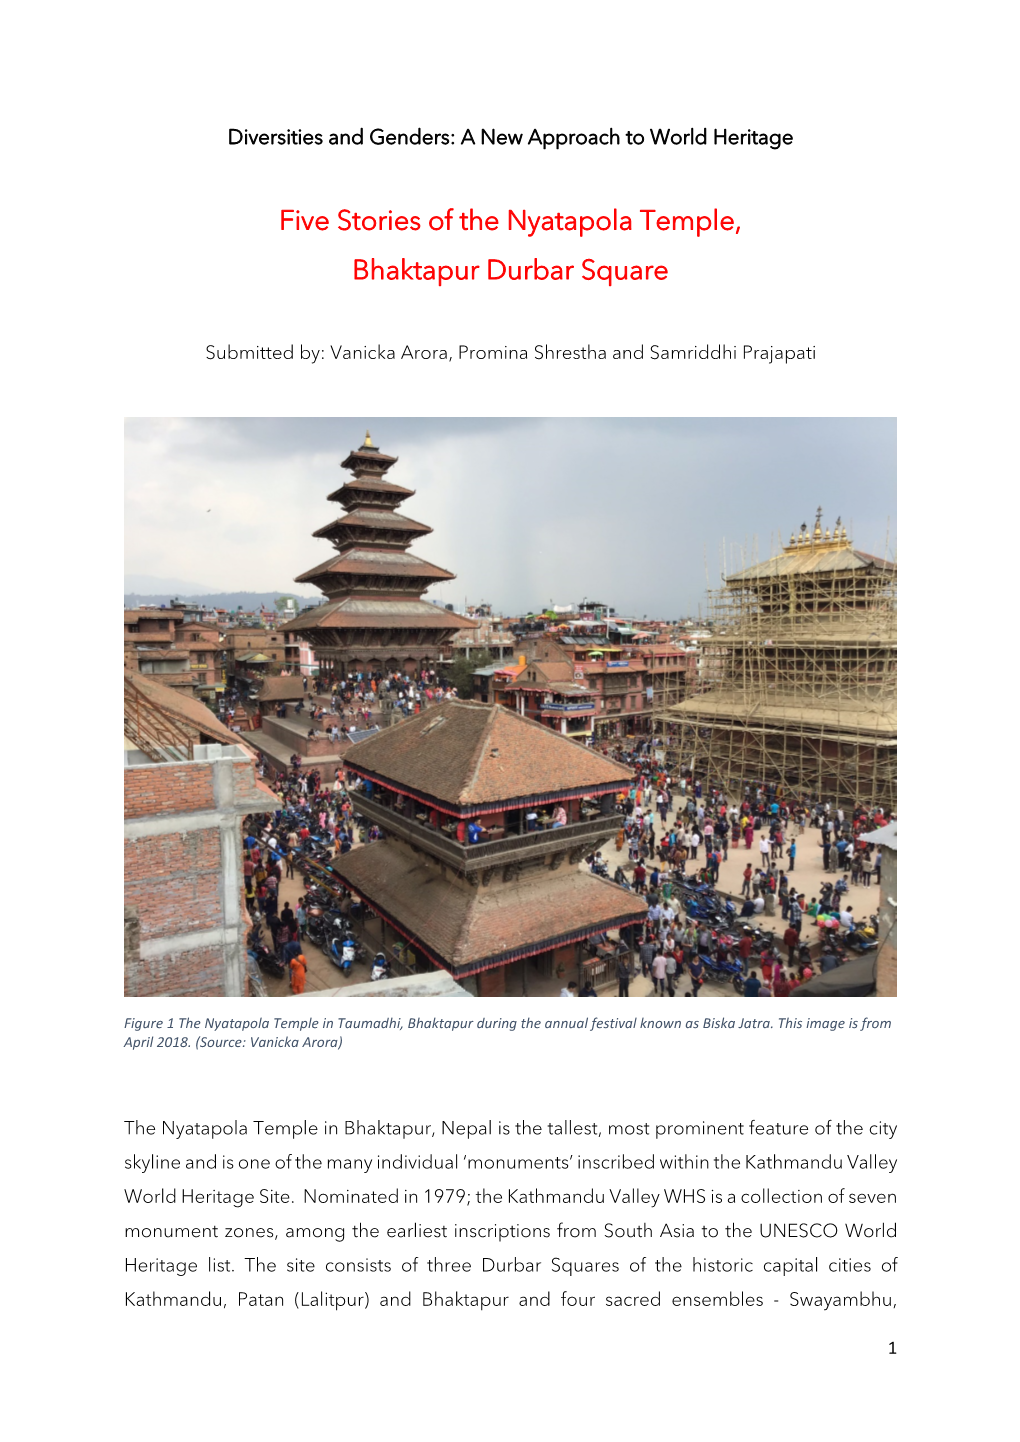 Five Stories of the Nyatapola Temple, Bhaktapur Durbar Square